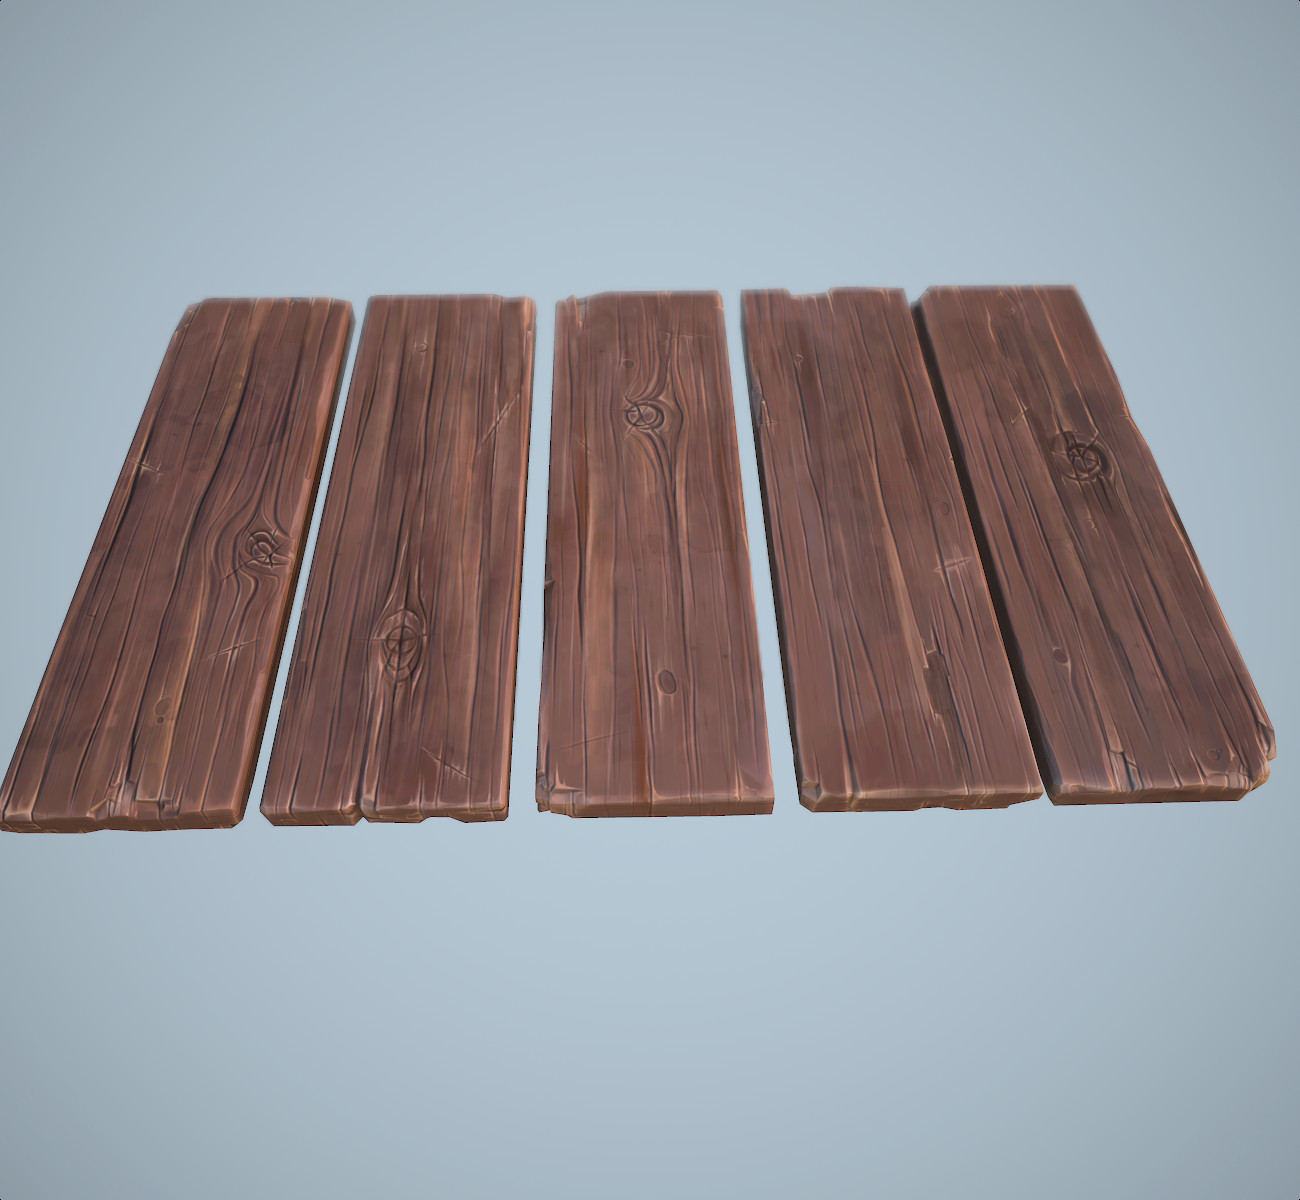 ArtStation - cartoon wooden planks